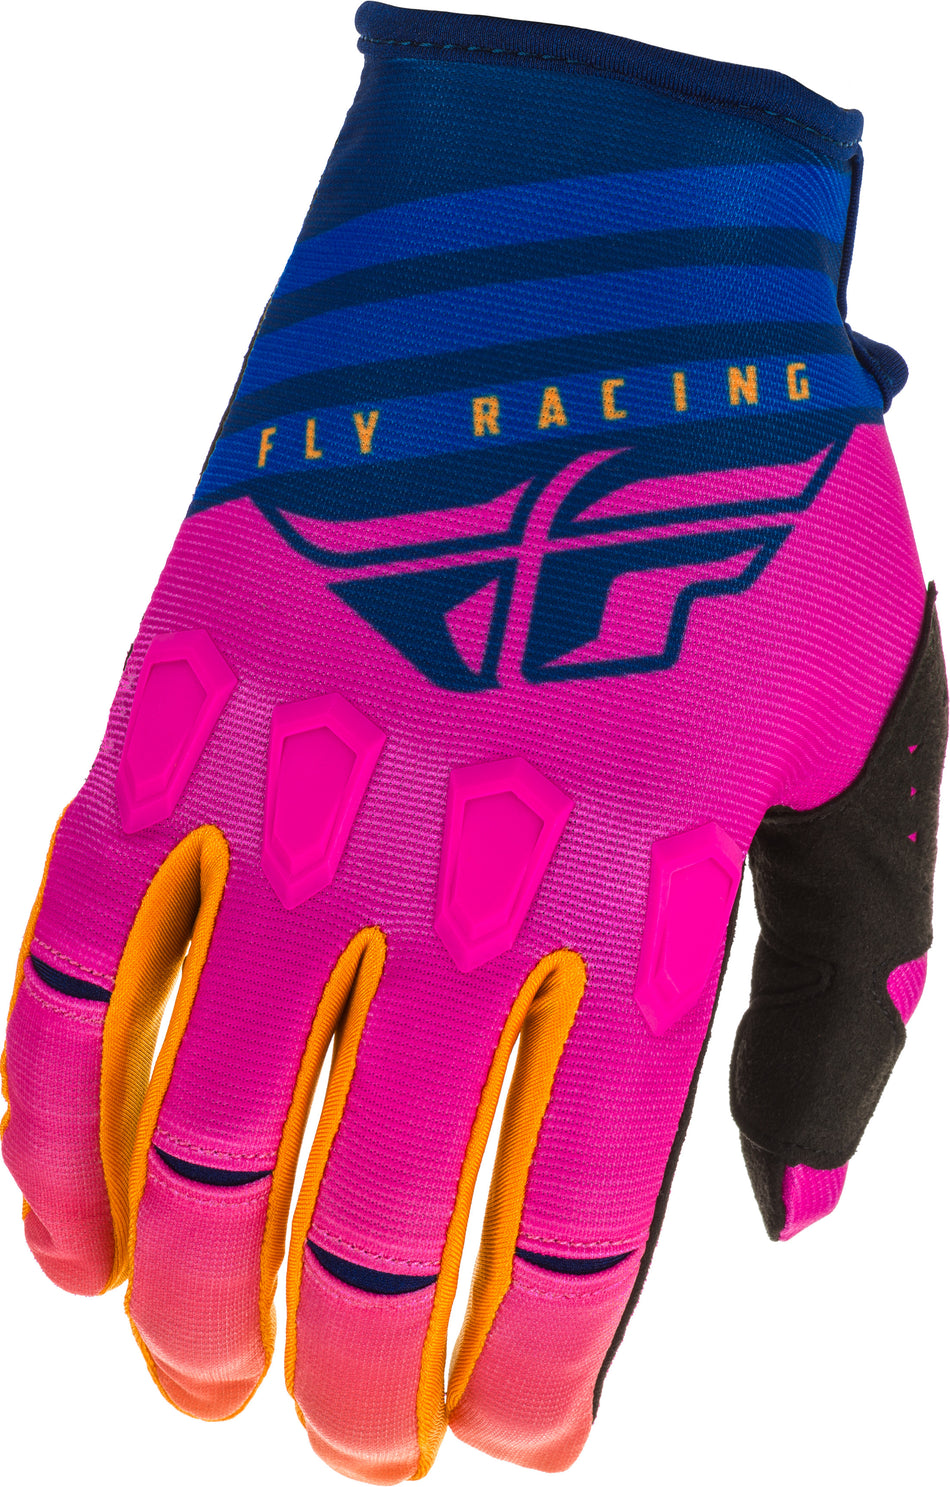 FLY RACING Kinetic K220 Gloves Midnight/Blue/Orange Sz 09 373-51909